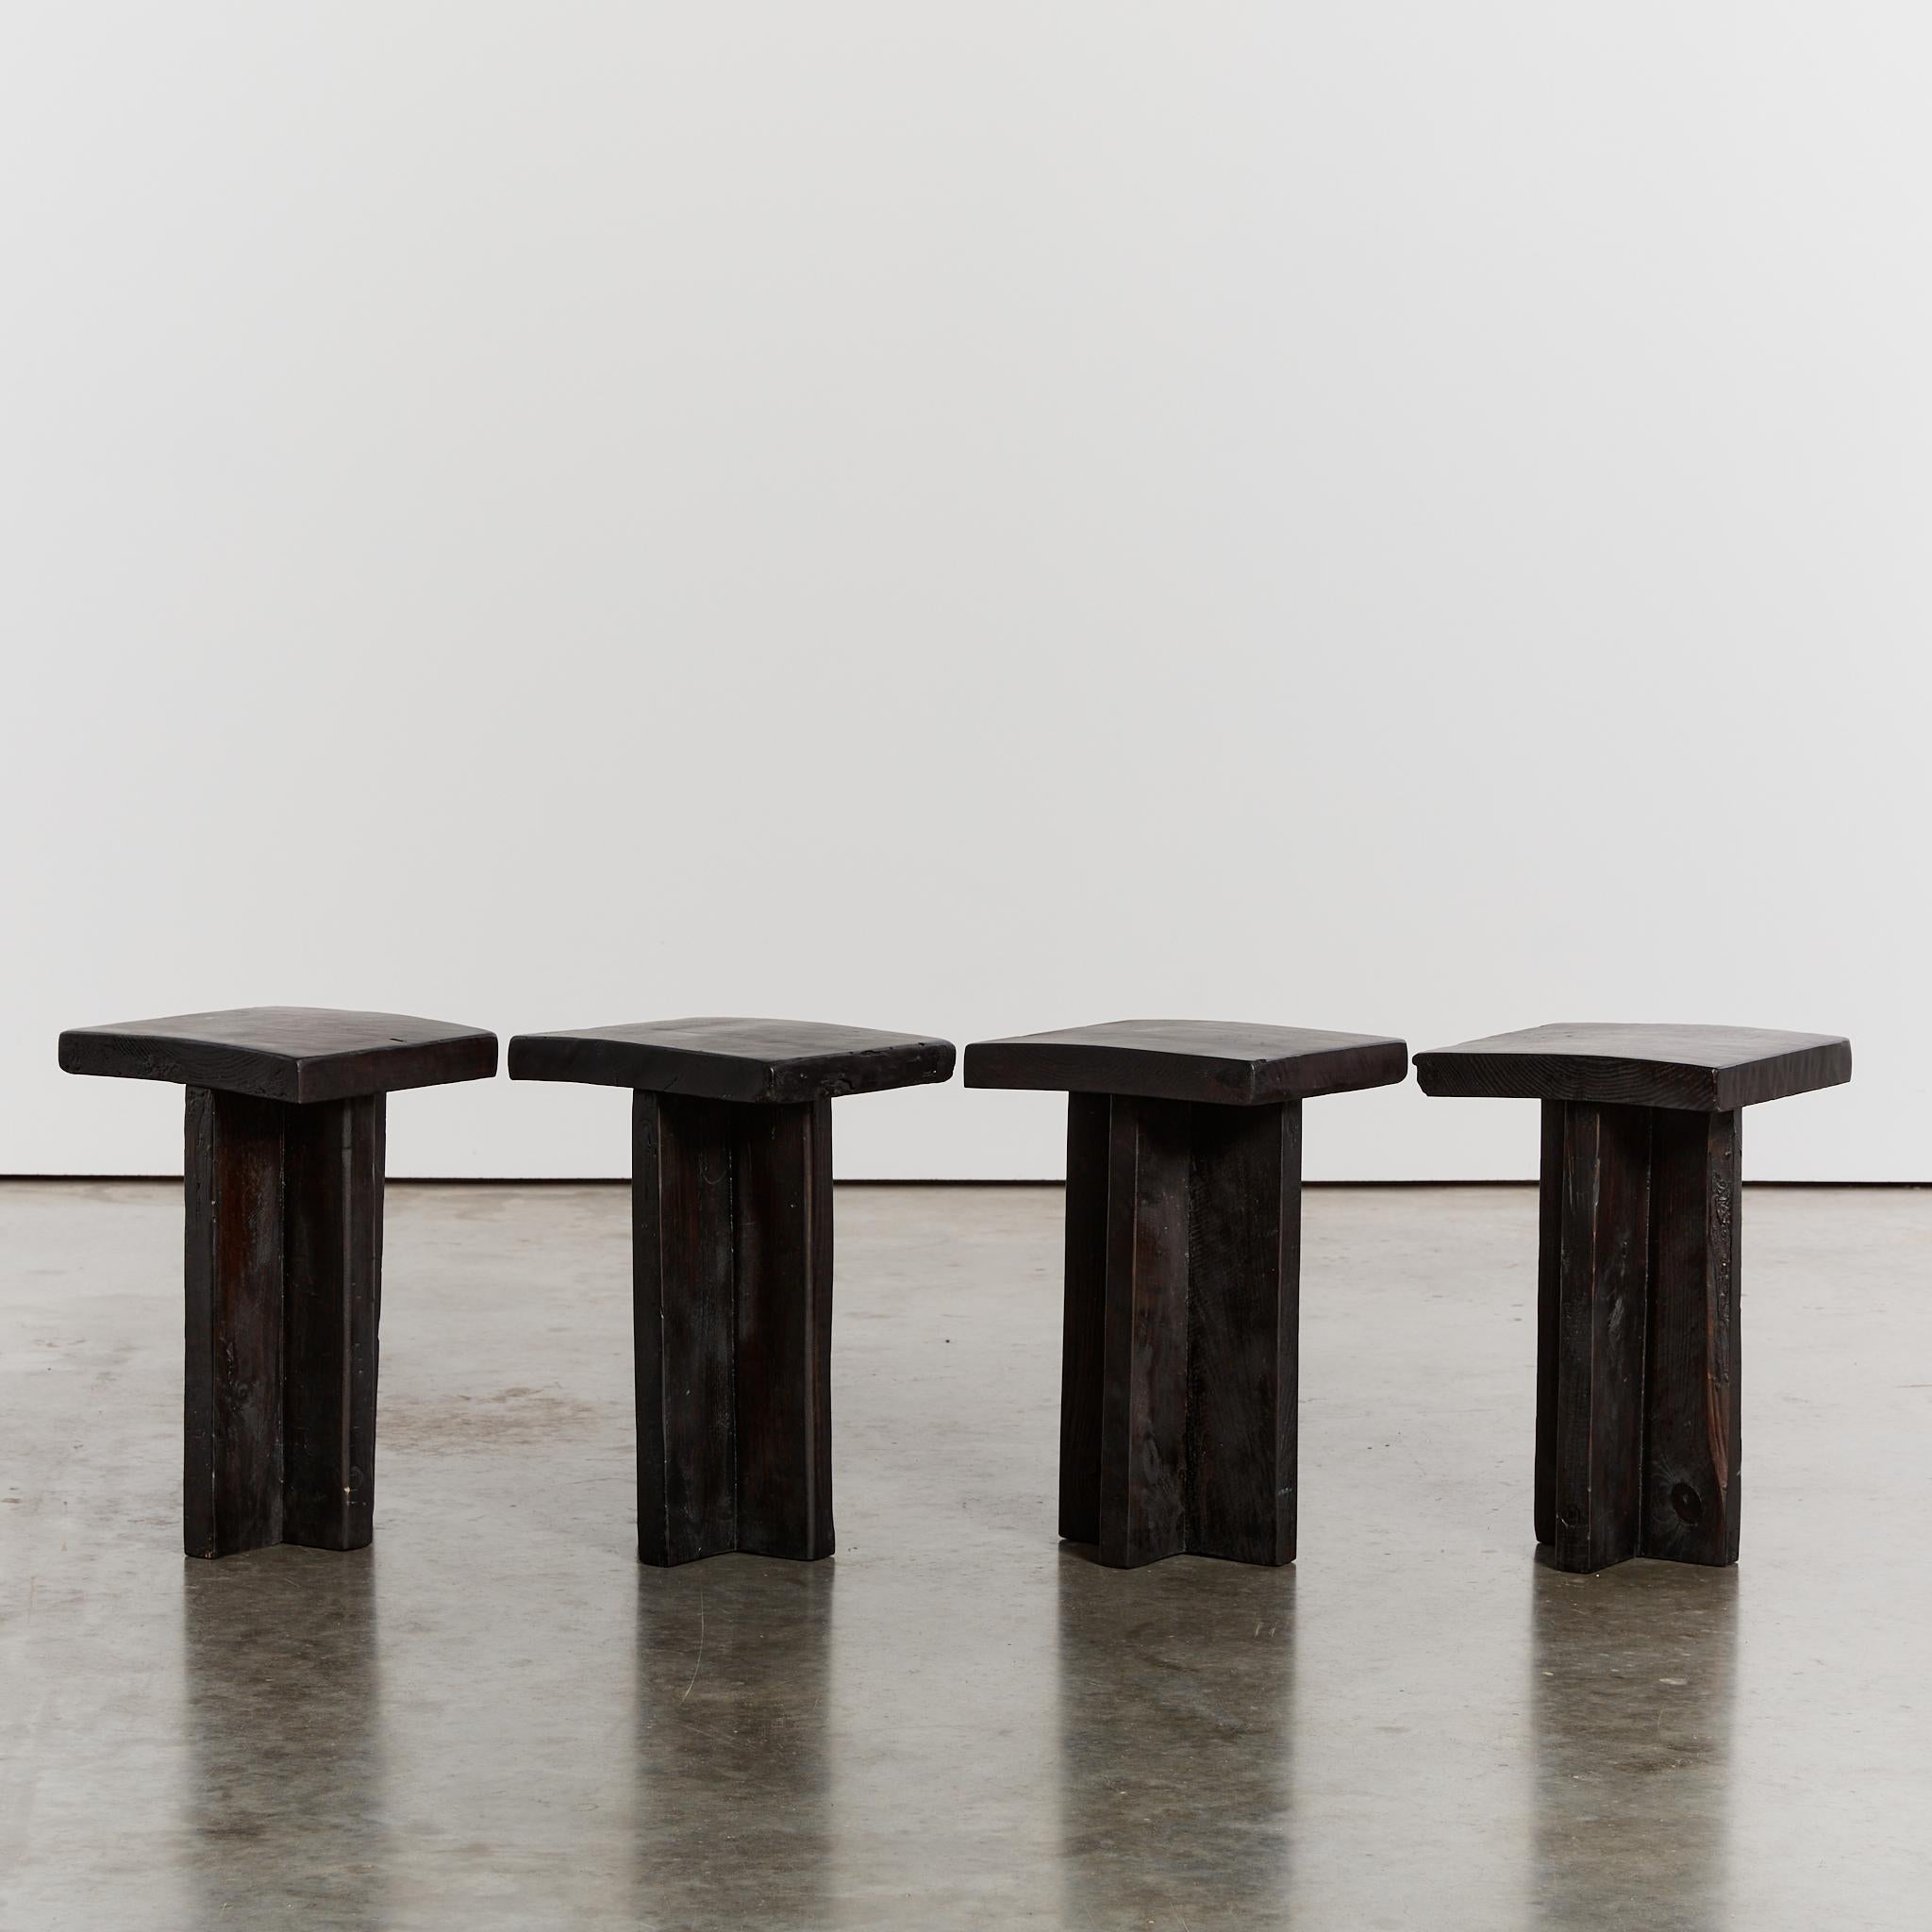 Spanish Wabi sabi T shaped ebonised stools or side tables